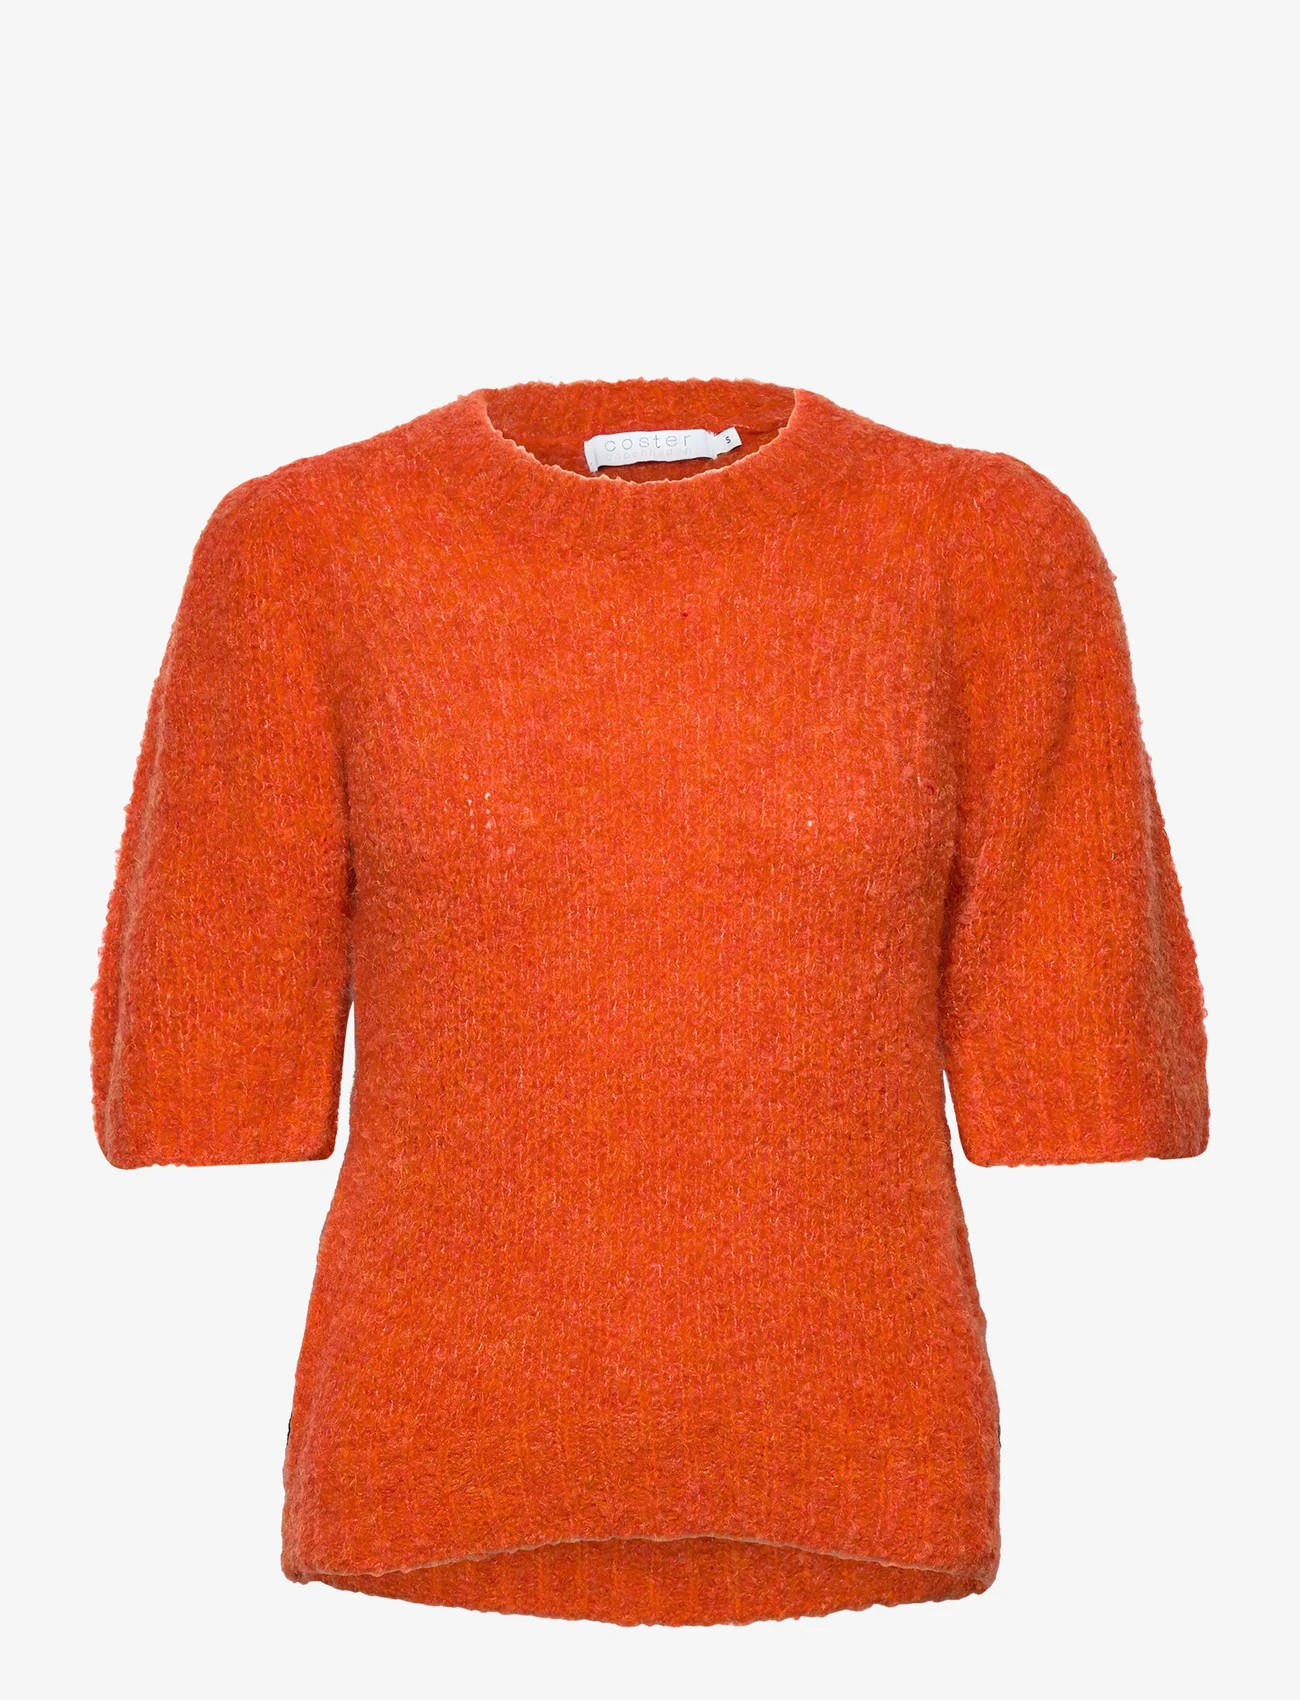 Coster Copenhagen - Knit with puff sleeves - trøjer - orange melange - 0